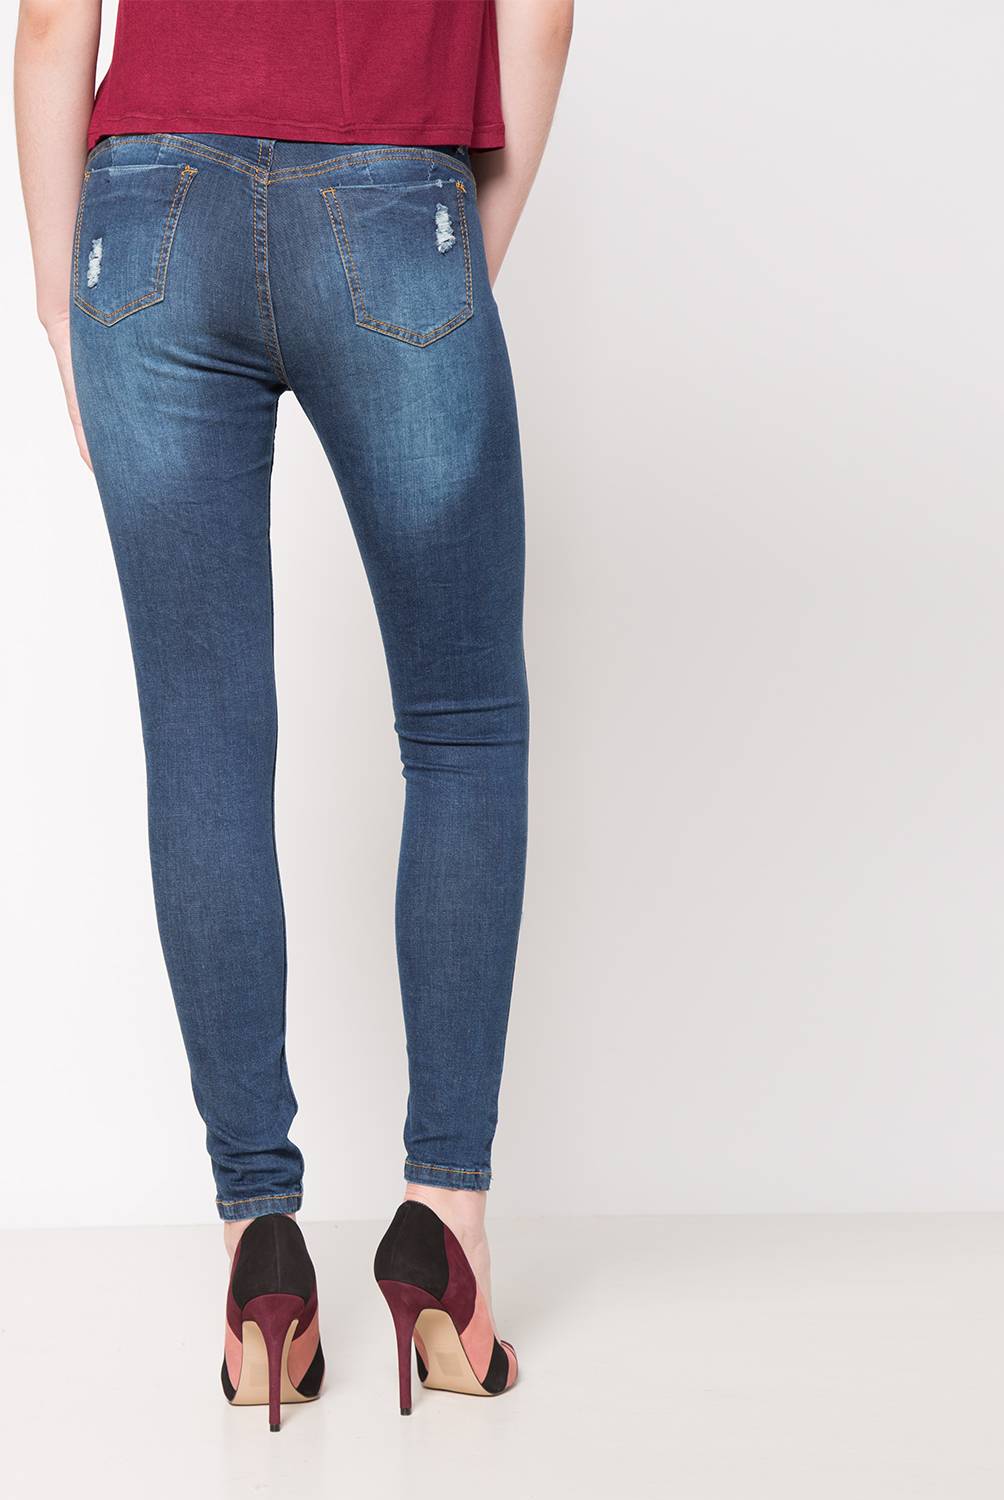 MOSSIMO - Jeans Moda Rasgados